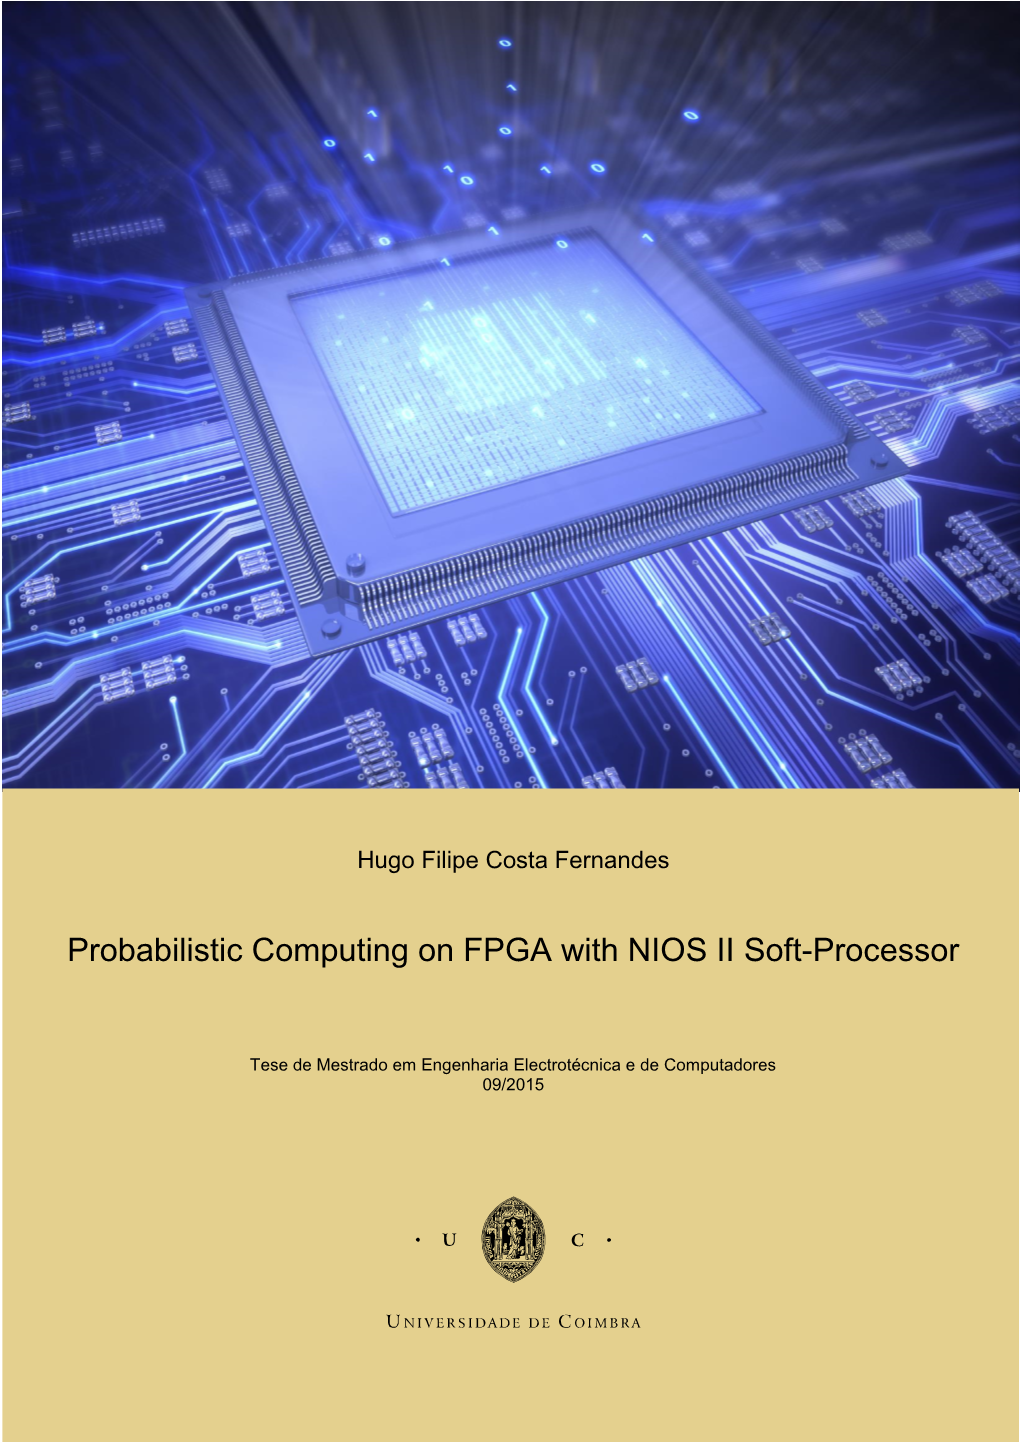 Probabilistic Computing on FPGA with NIOS II Soft-Processor